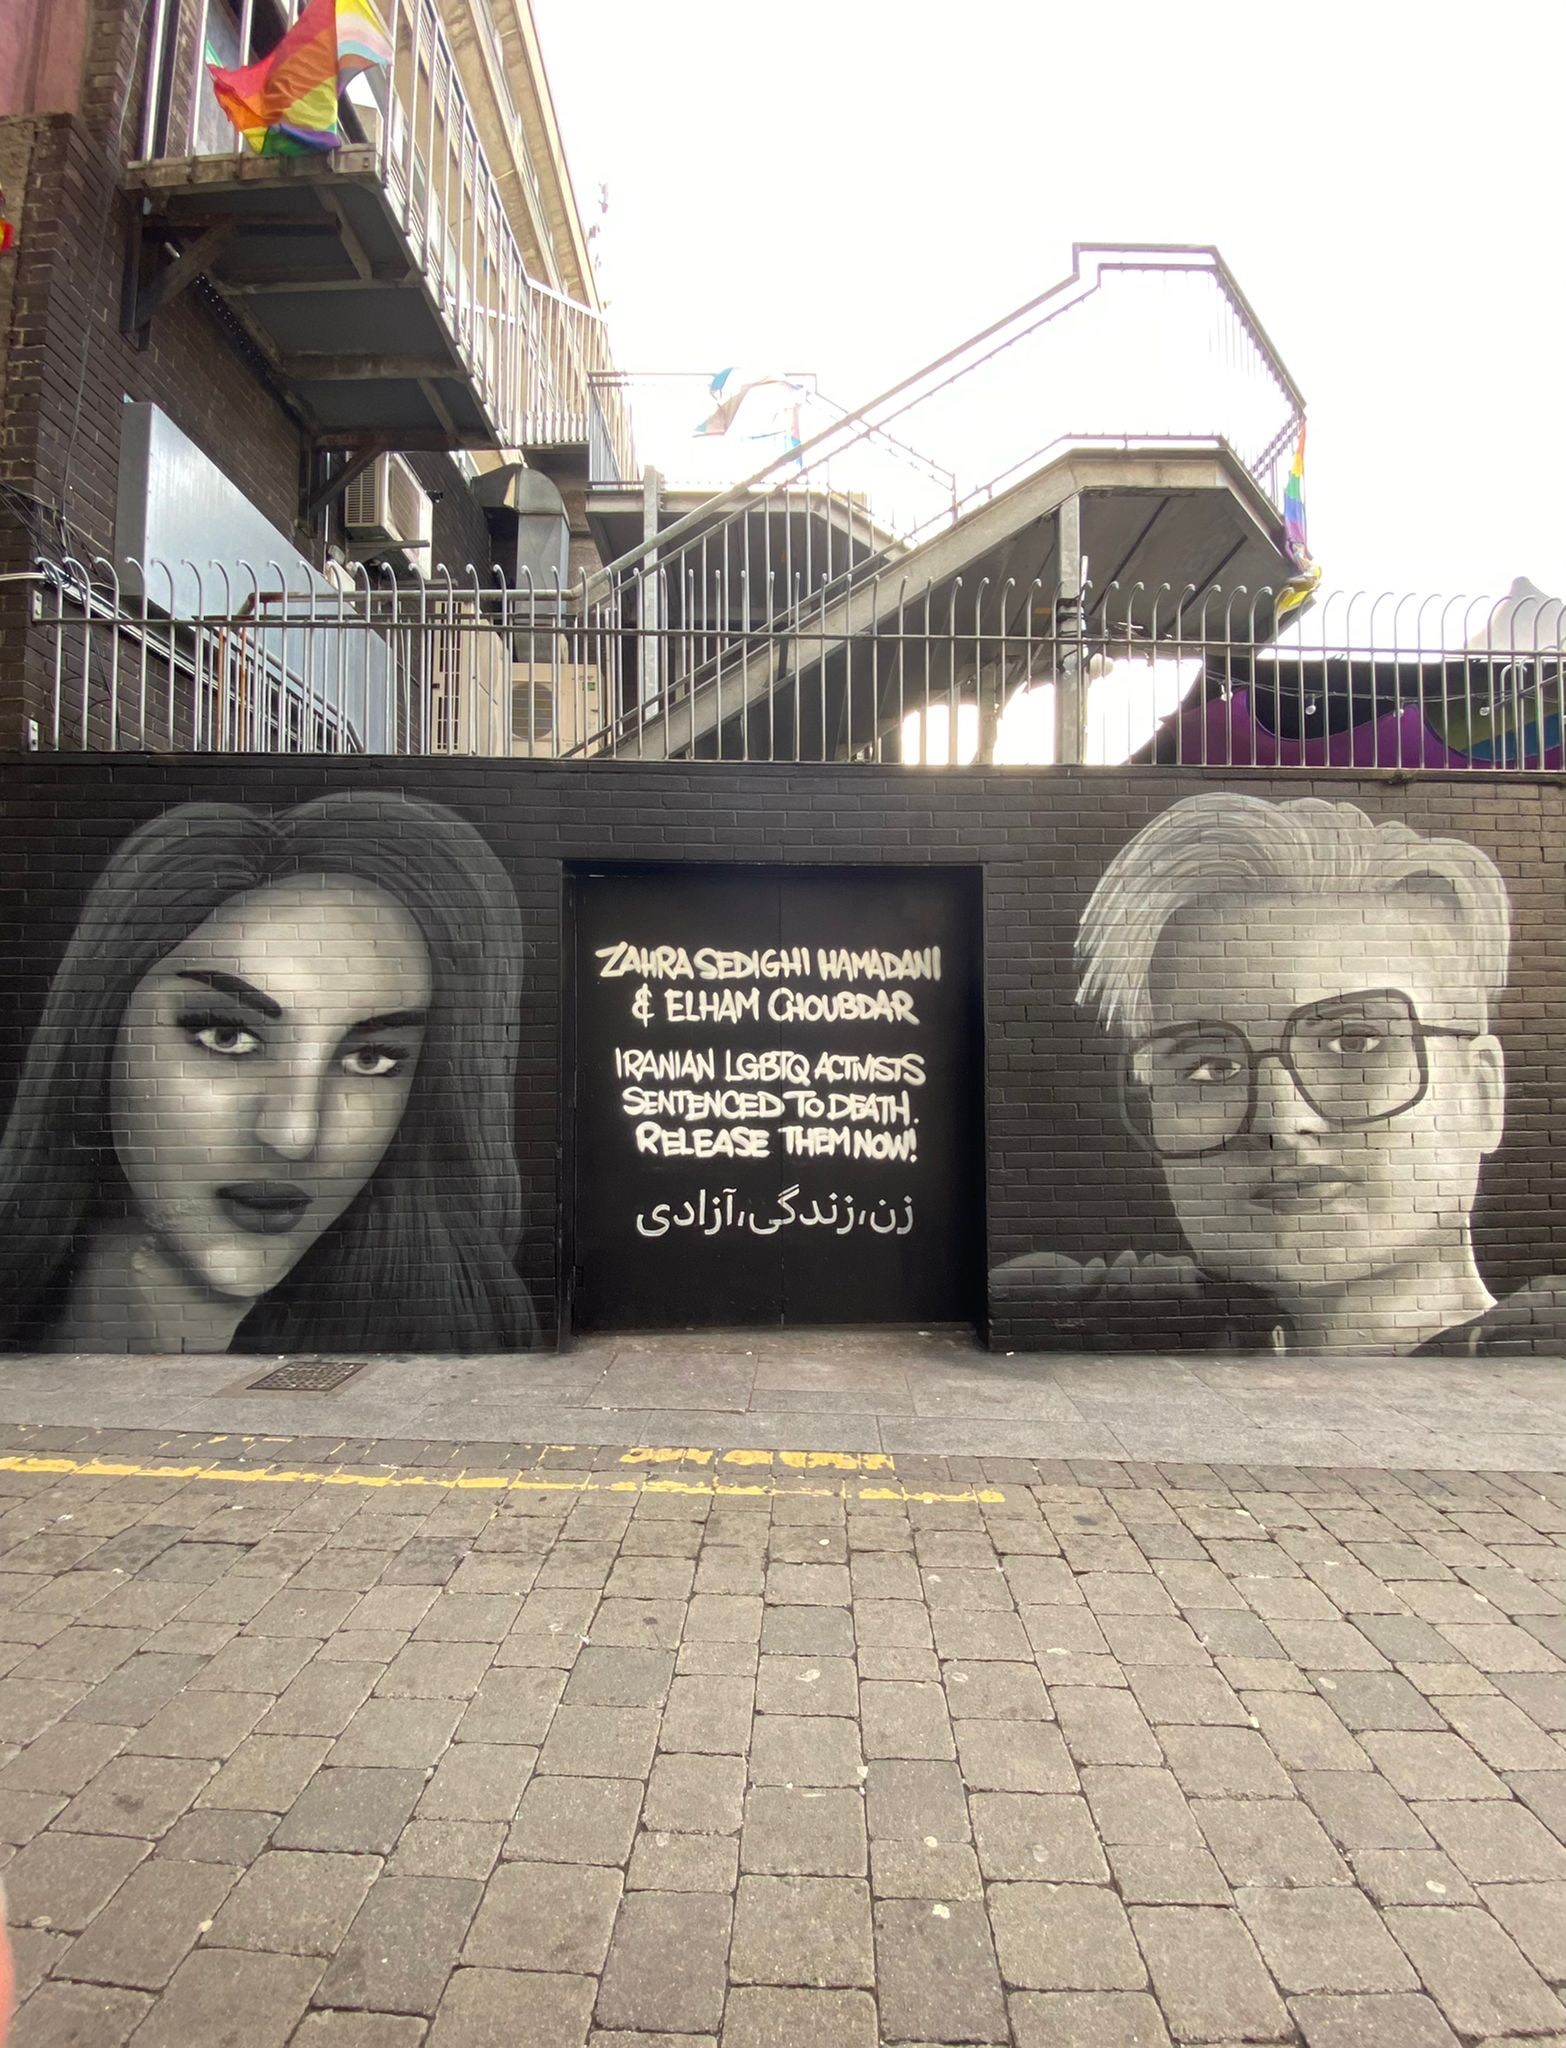 A mural of Iranian LGBTI rights defender Zahra Sedighi-Hamadani (Sareh) and Elham Choubdar